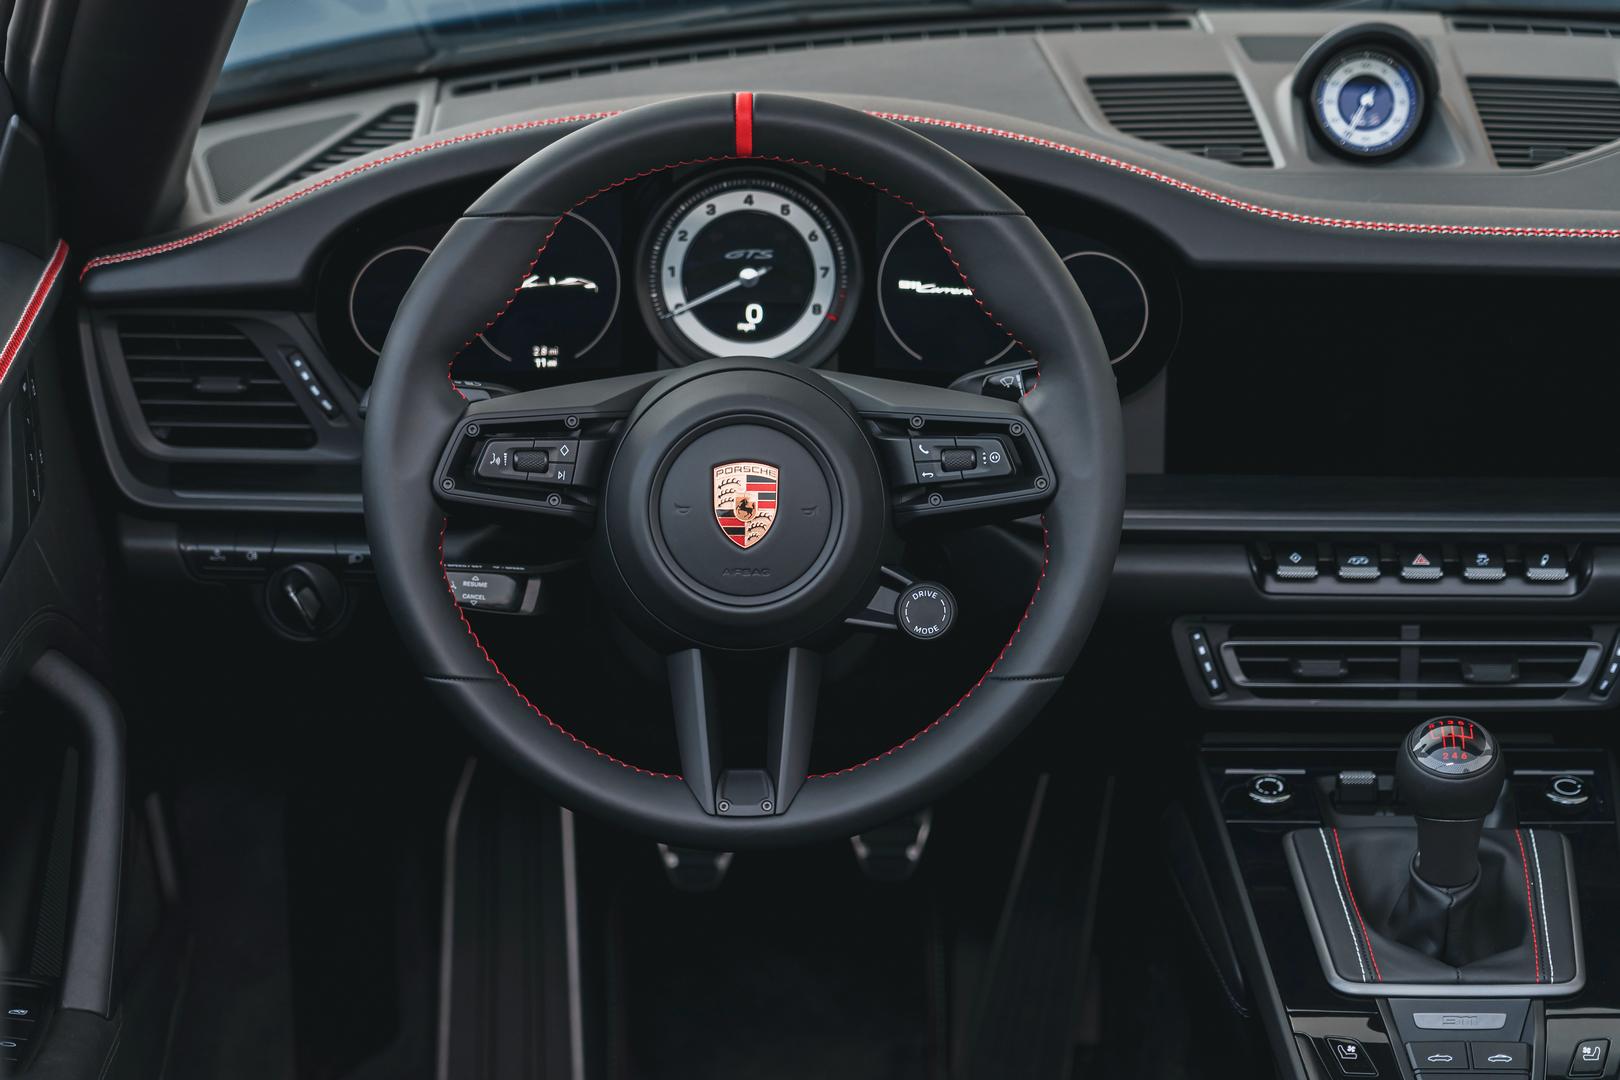 Carrera GTS steering wheel